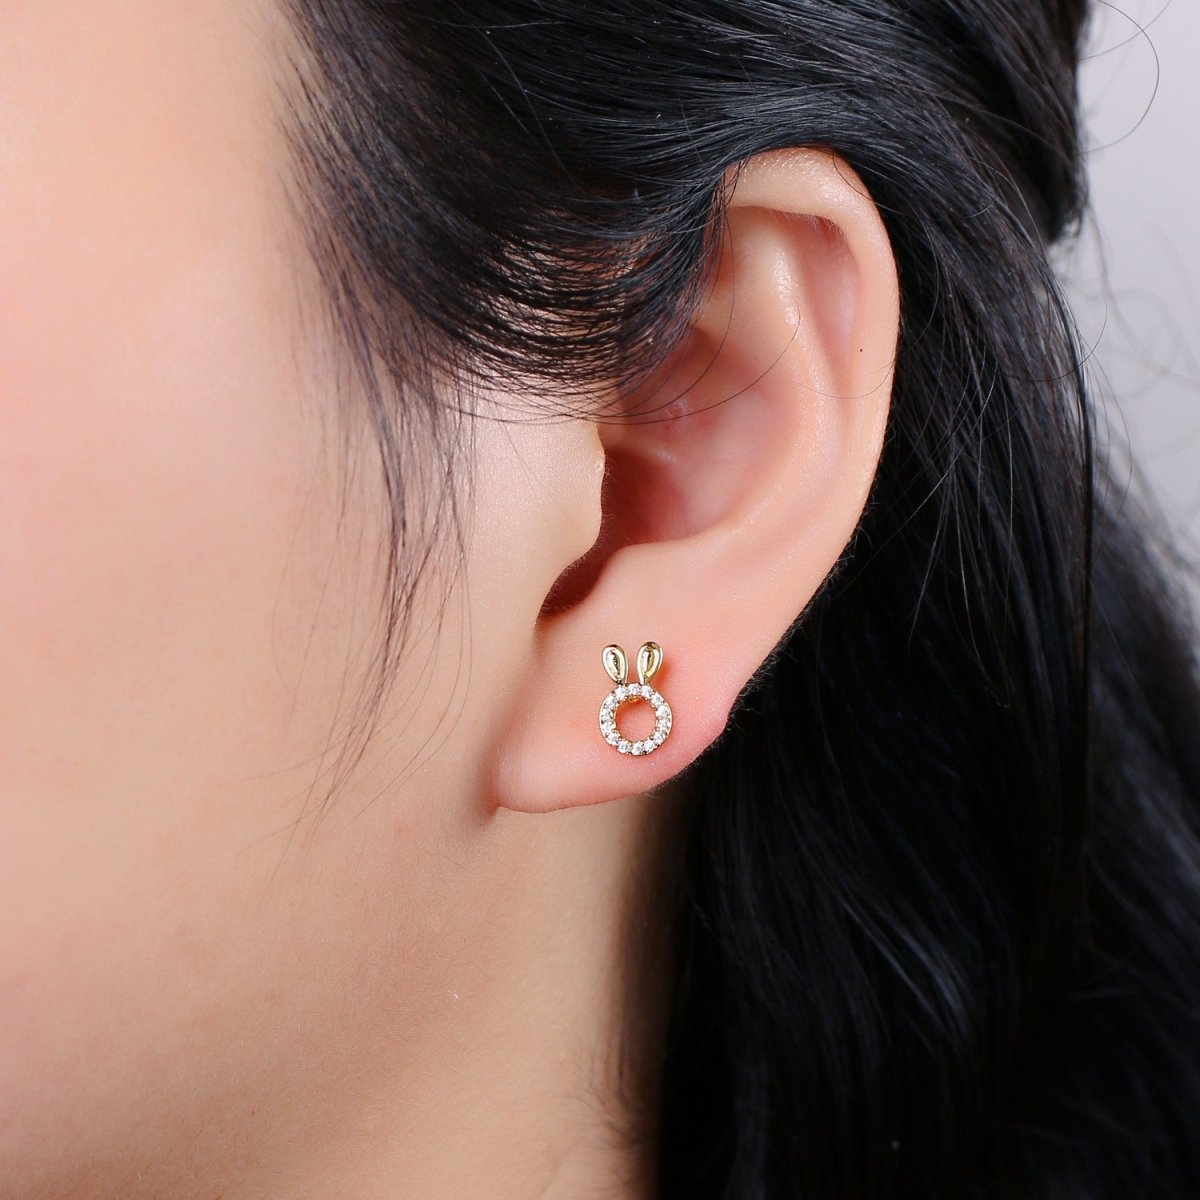 Bunny Stud Earrings • Rabbit Earrings • Rabbit Jewelry • Gold Micro Pave Animal Earrings • Stud Earrings • Valentine gift• Cute Earrings Q-364 - DLUXCA